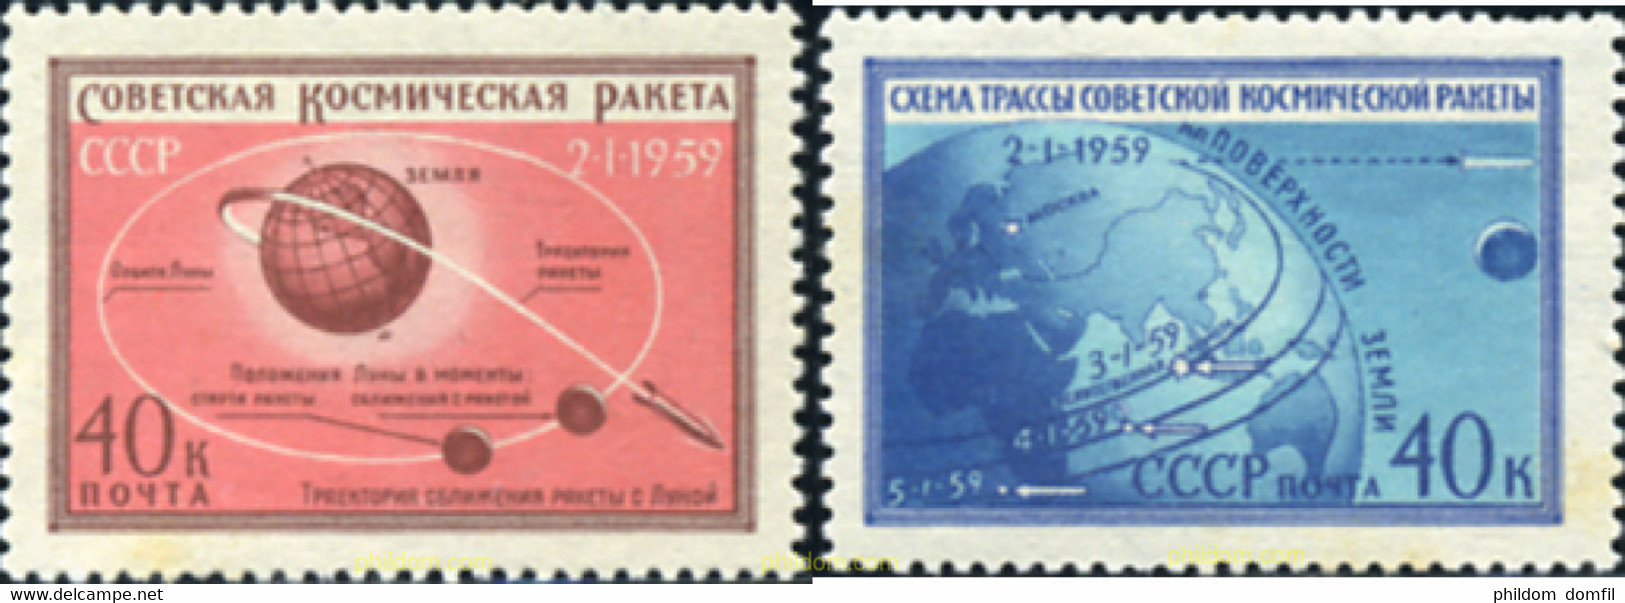 356556 MNH UNION SOVIETICA 1959 PRIMER COETE SOVIETICO DEL ESPACIO - Sammlungen